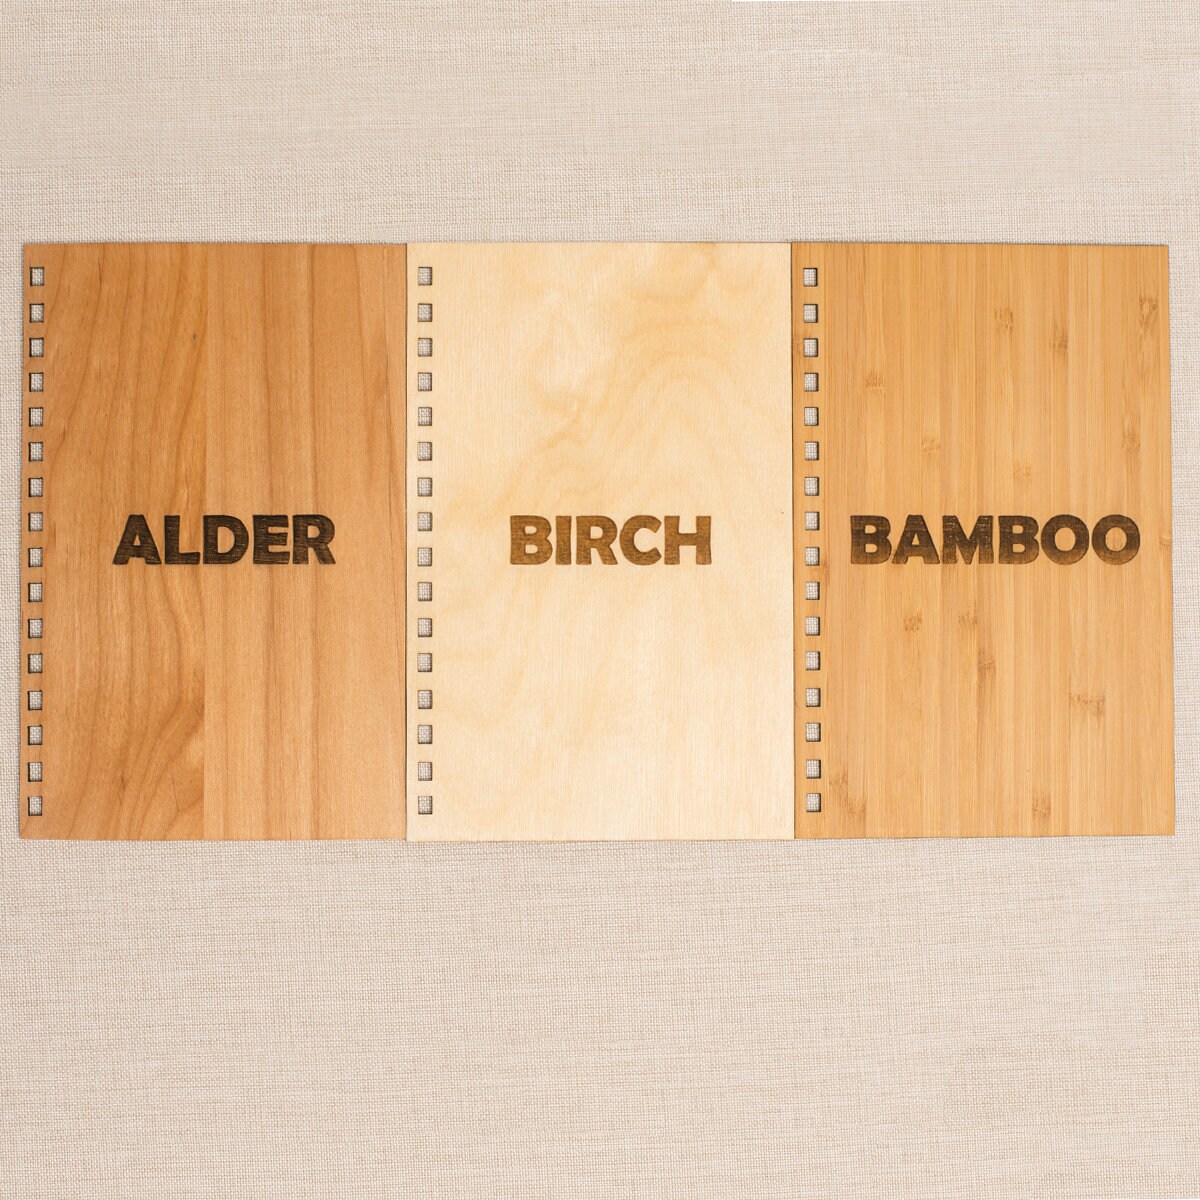 Bamboo: A Poor Man's Timber  Ponytail Journal & Supplies